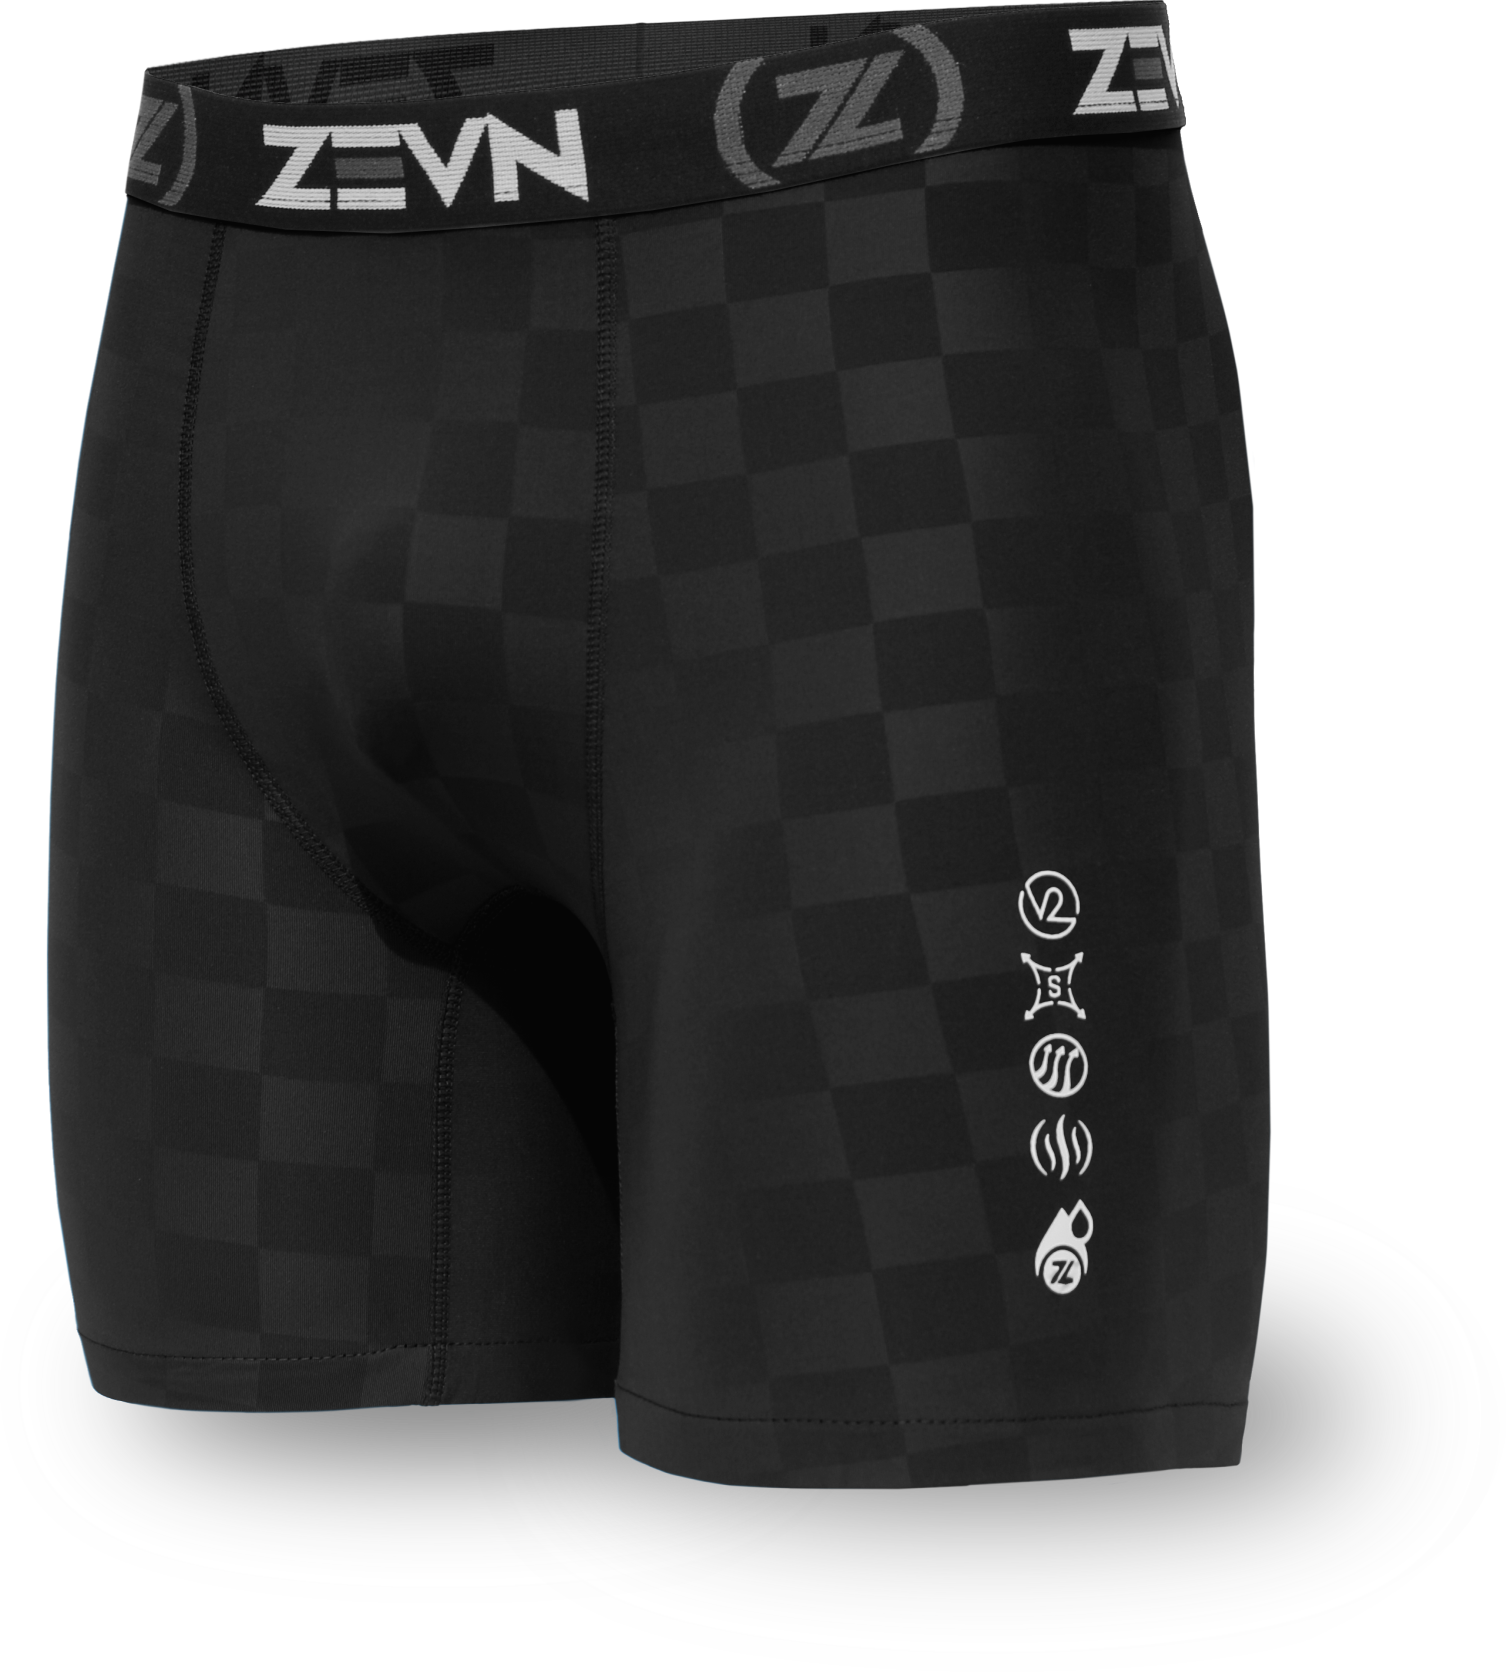 Men in wet & dry sports underwear: ZEVN ZVM Men's high performance